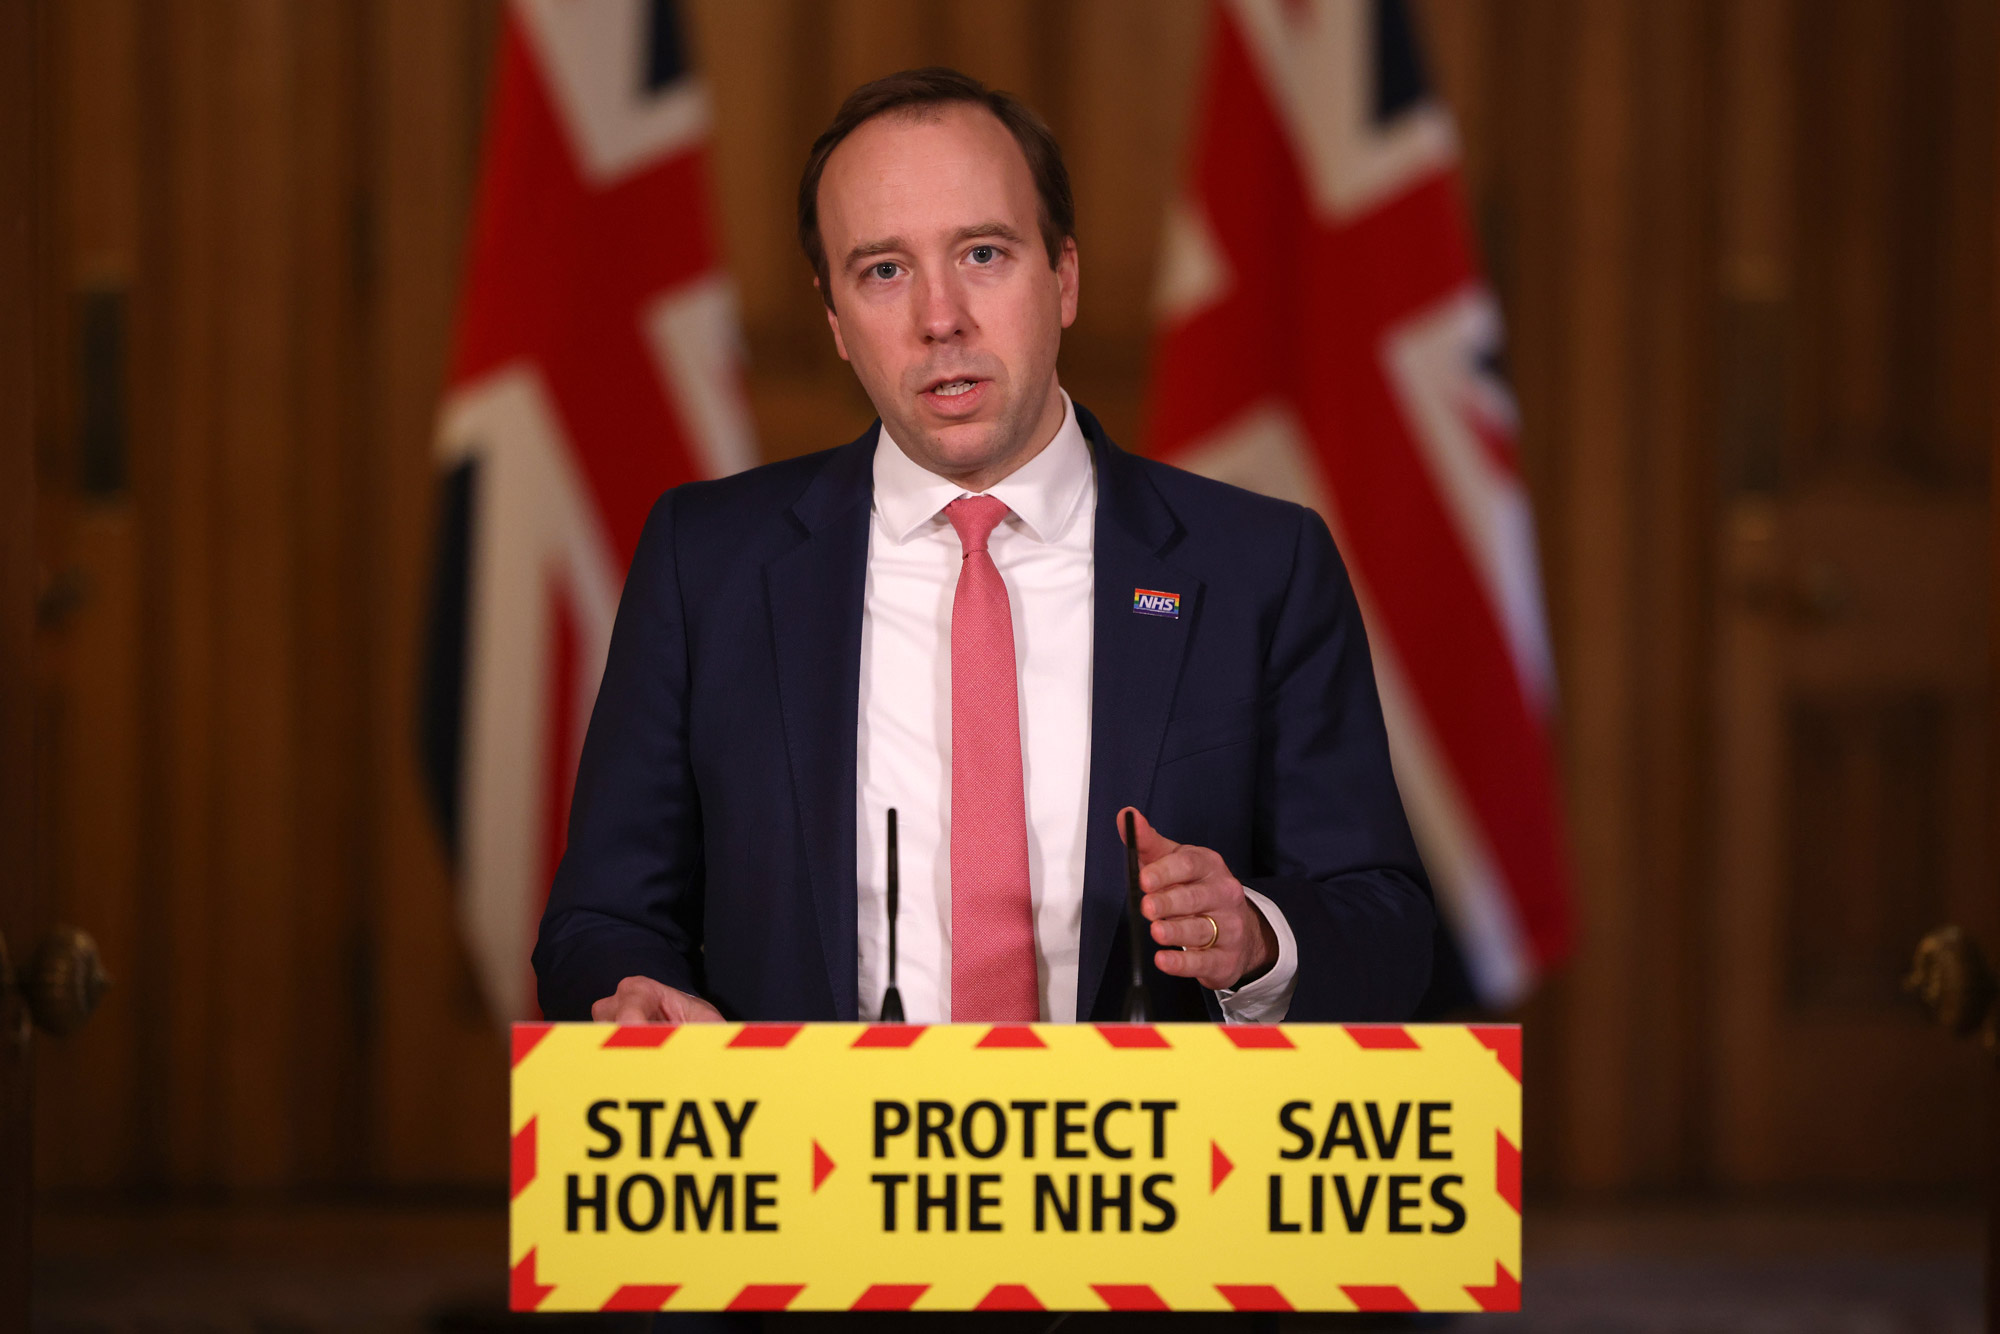 Health Secretary, Matt Hancock speaks at the government coronavirus briefing at Downing Street on March 5 in London.